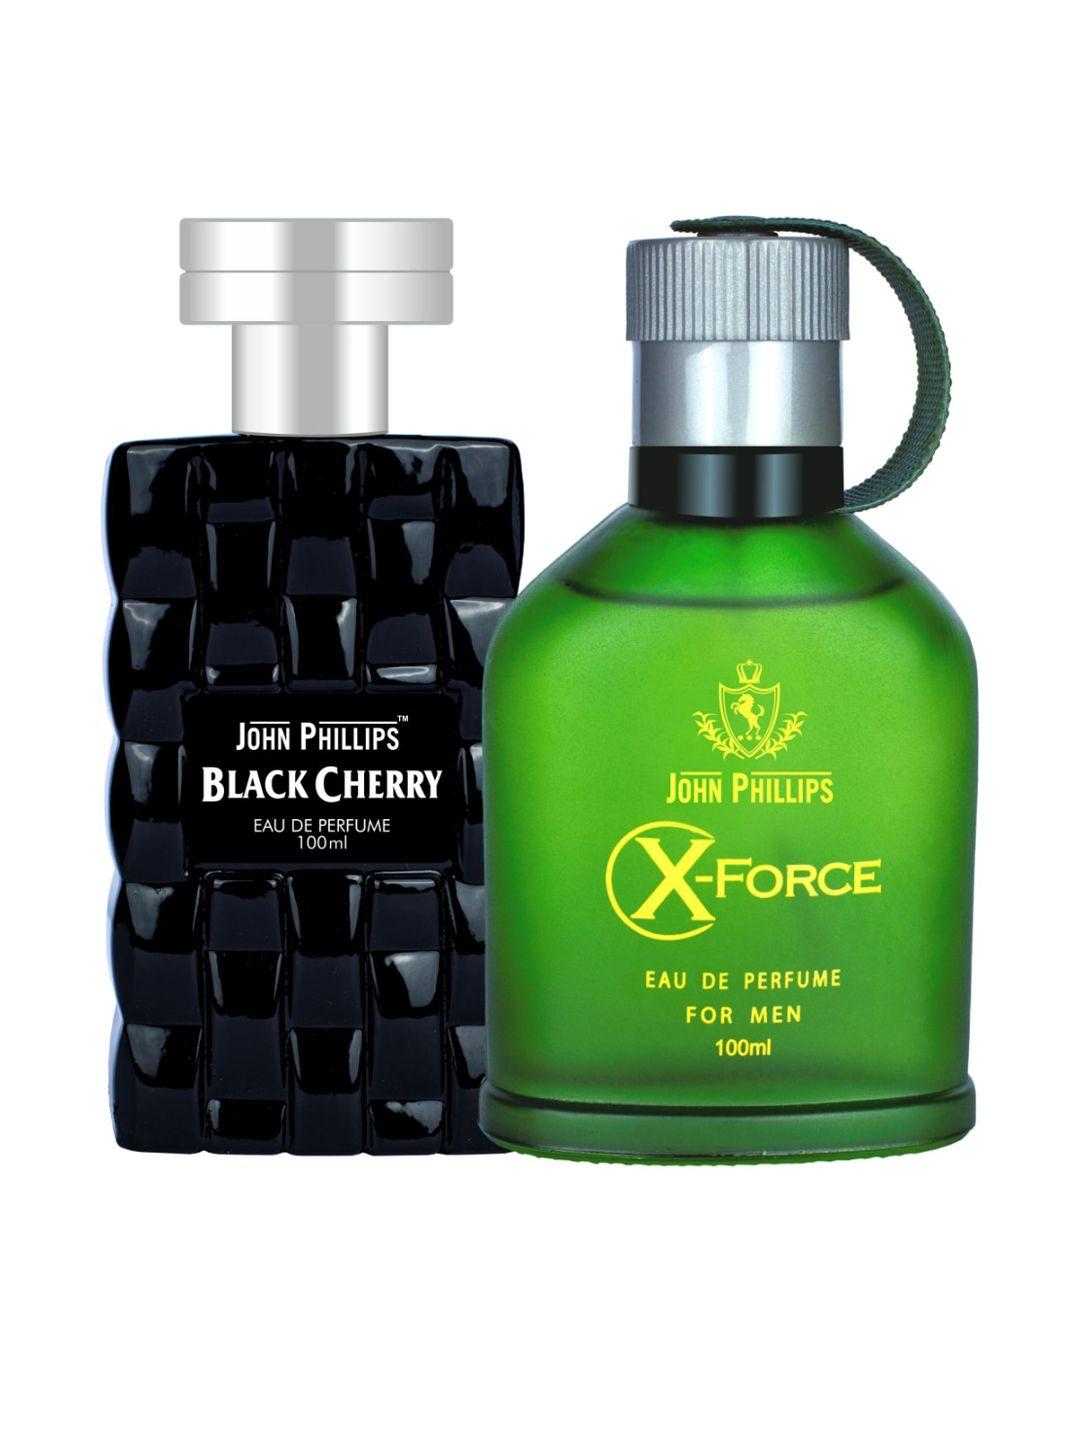 john phillips set of 2 black cherry eau de perfume & x-force eau de perfume - 100ml each